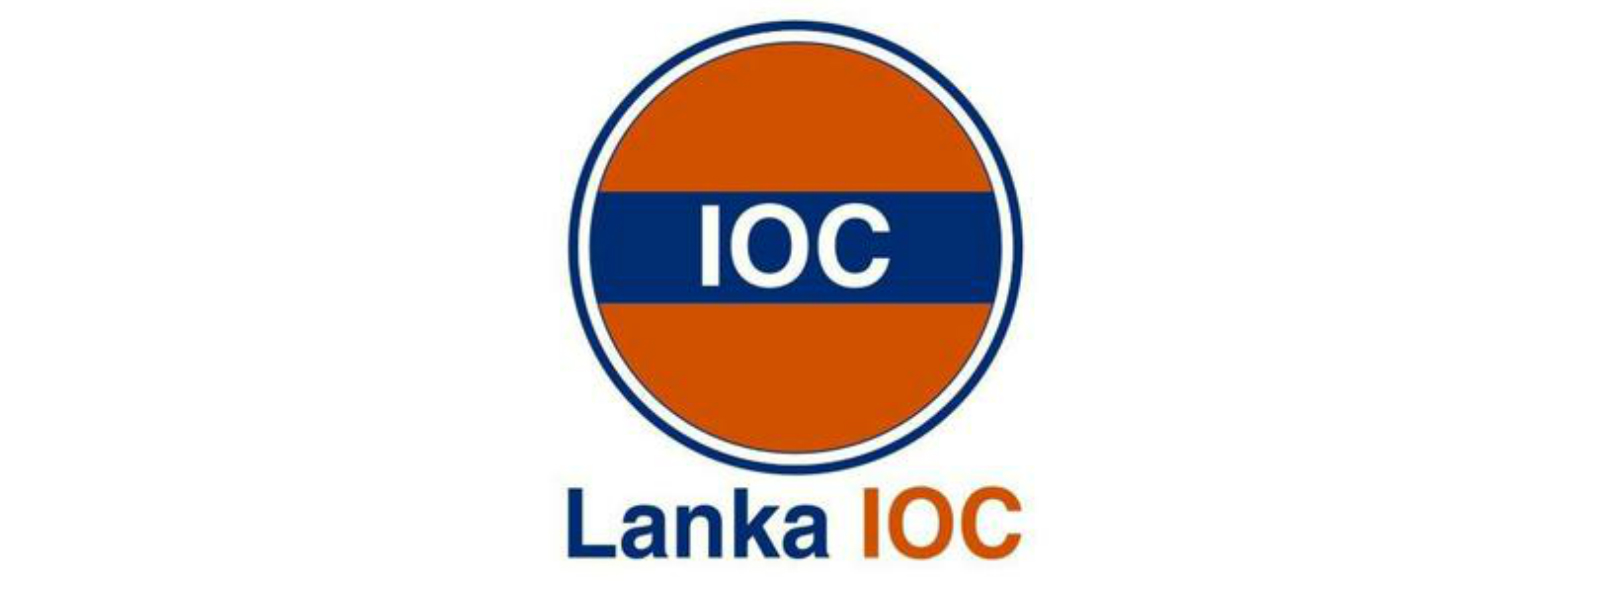 Lanka IOC fuel prices reduced